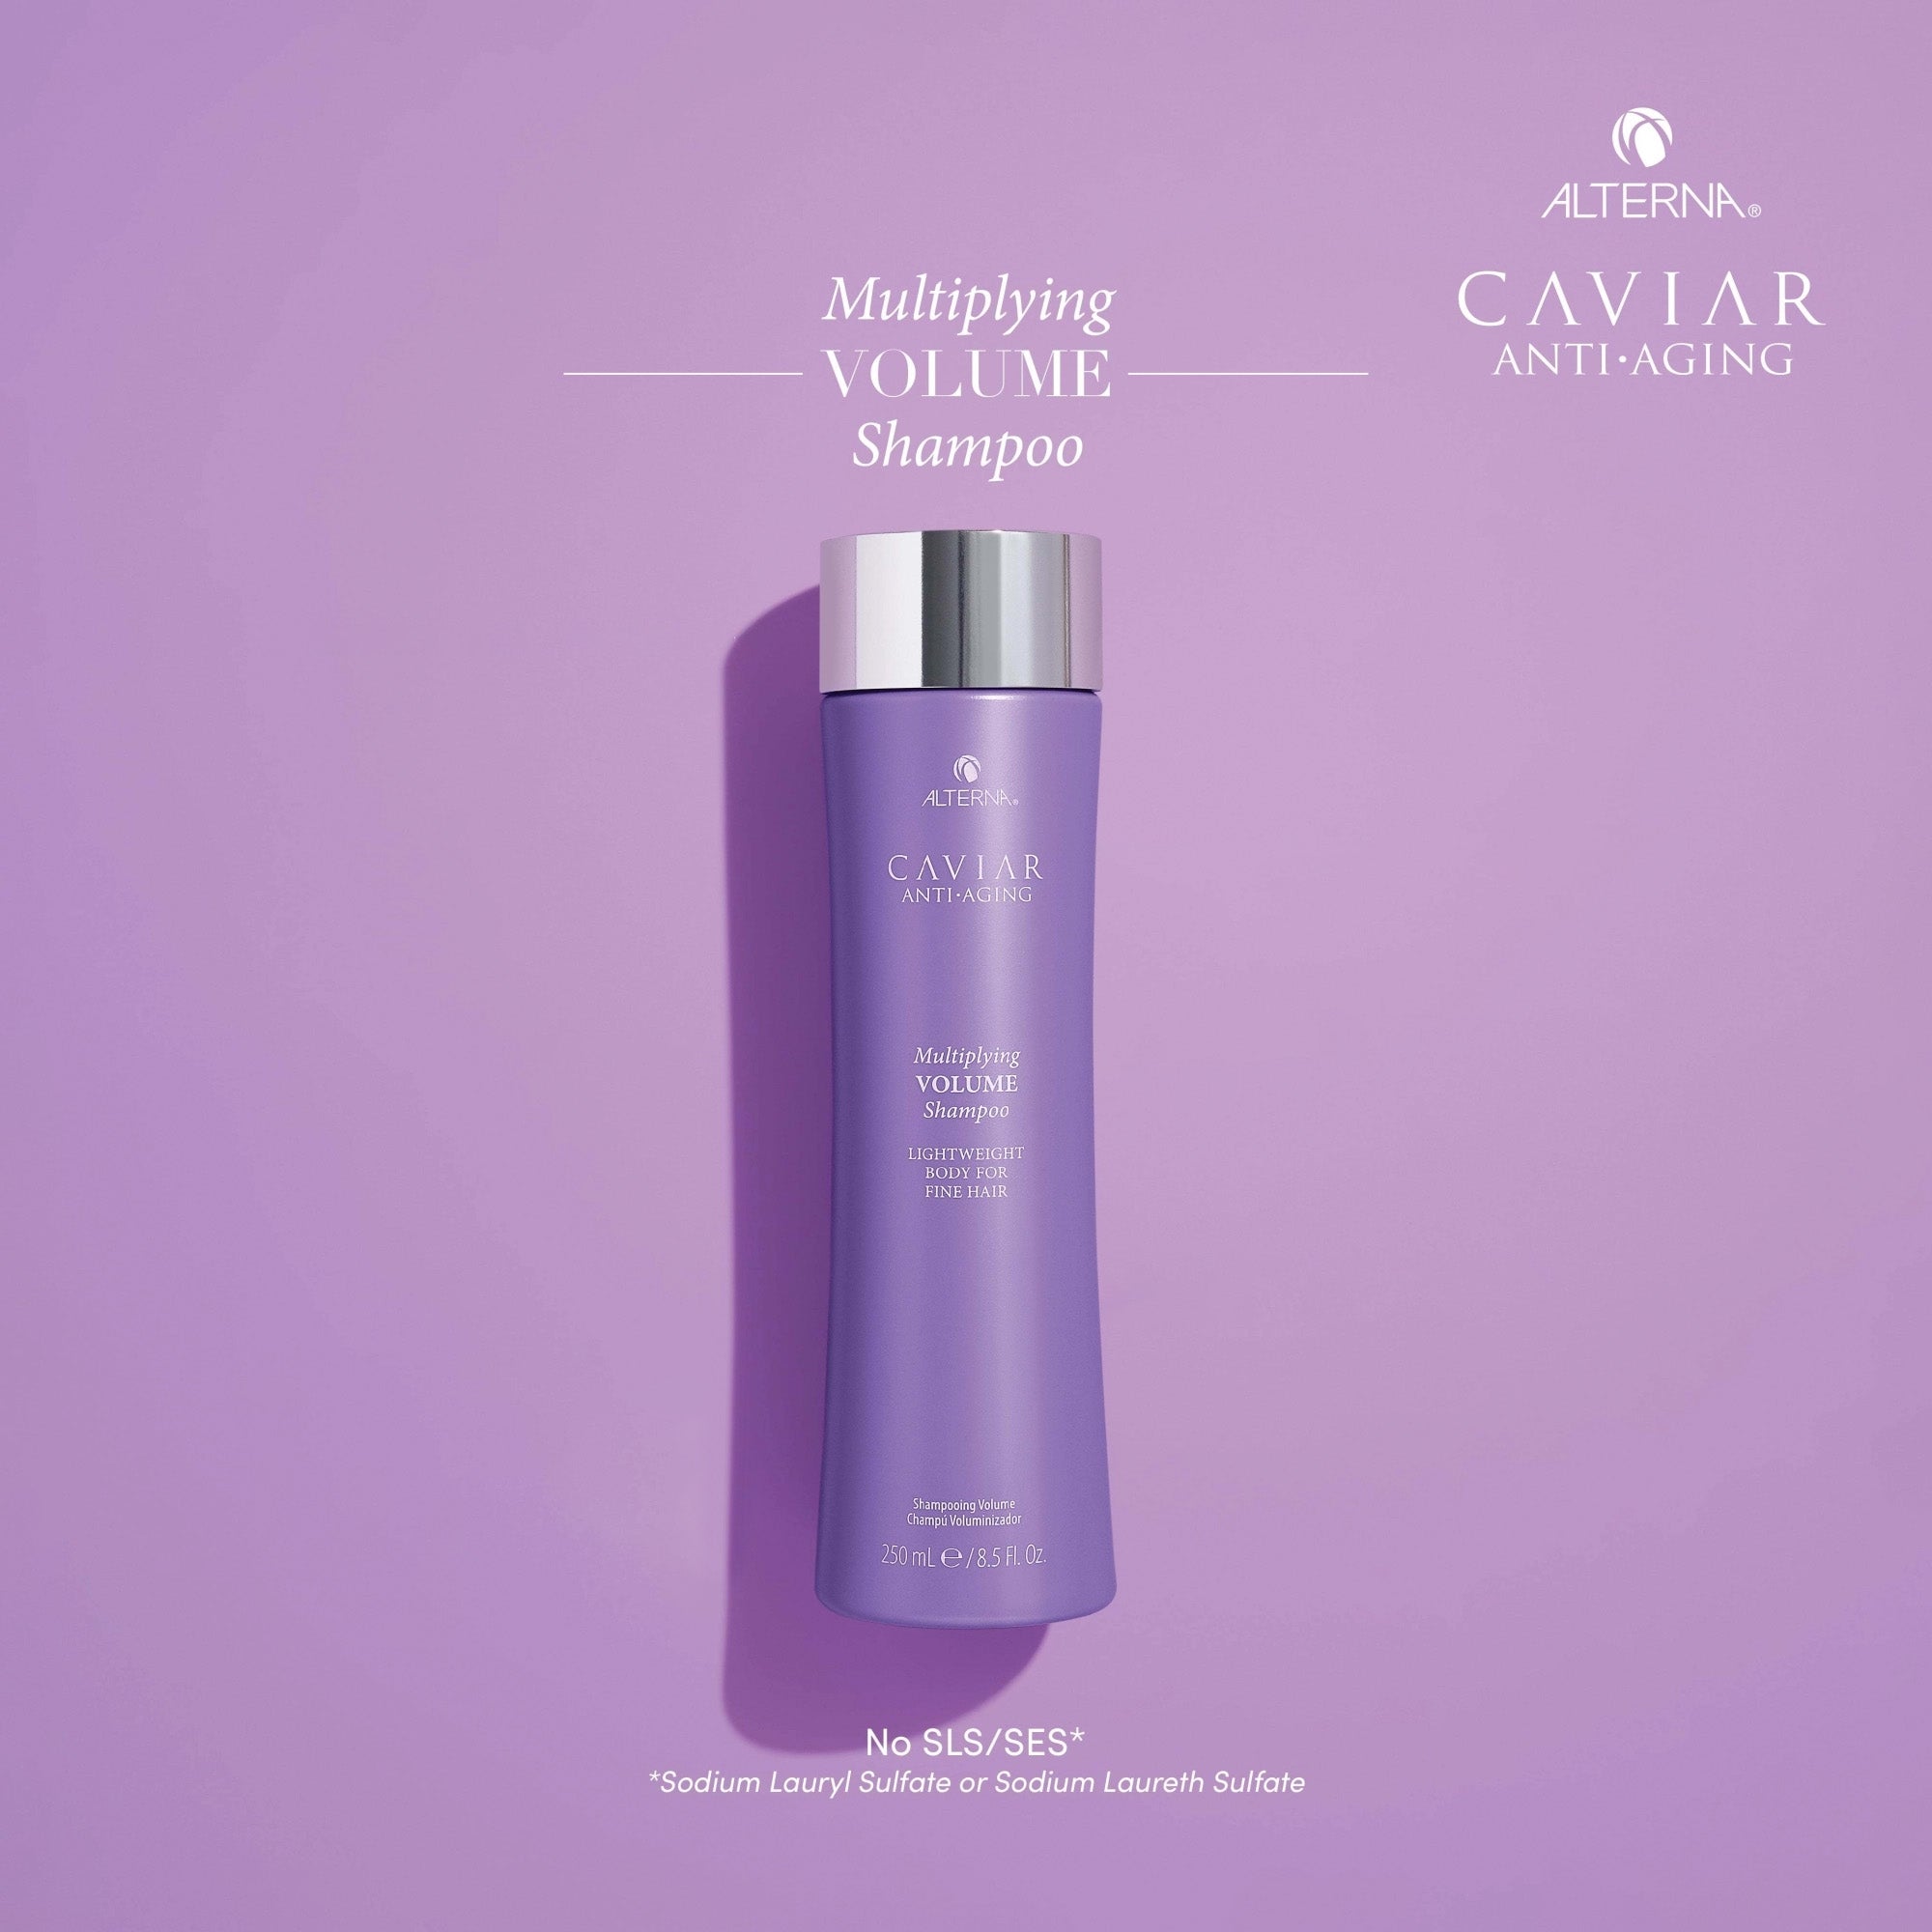 Alterna Caviar Anti-Aging Multiplying Volume Shampoo / 8.5 OZ